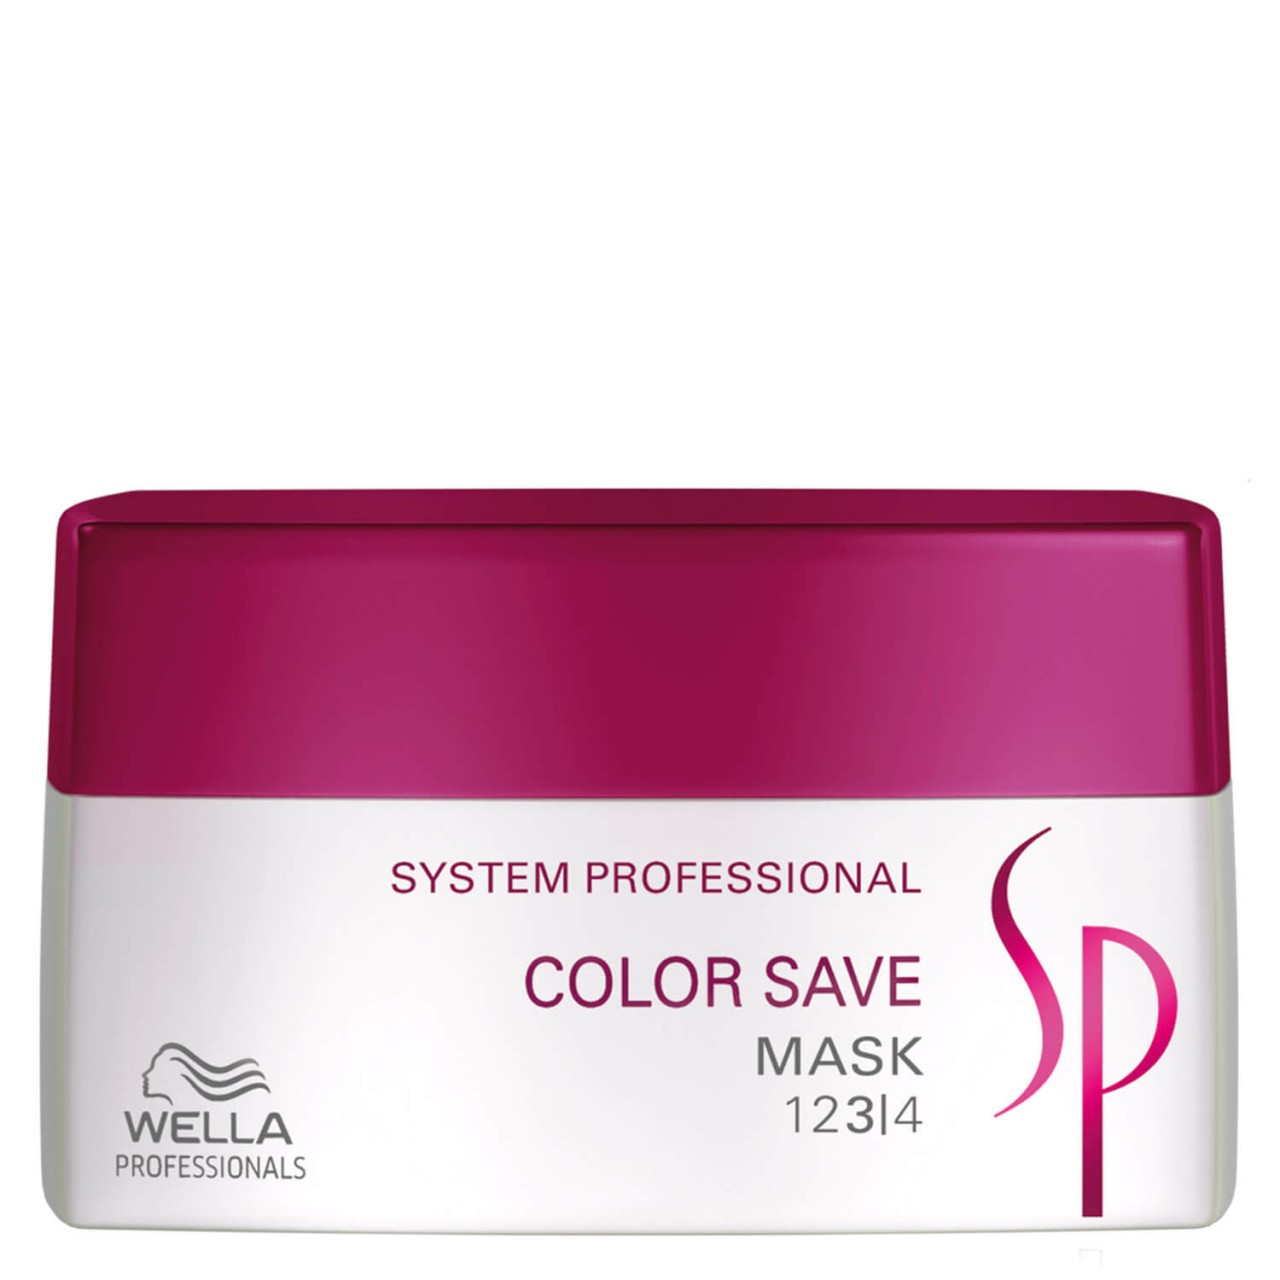 SP Color Save - Maske von Wella